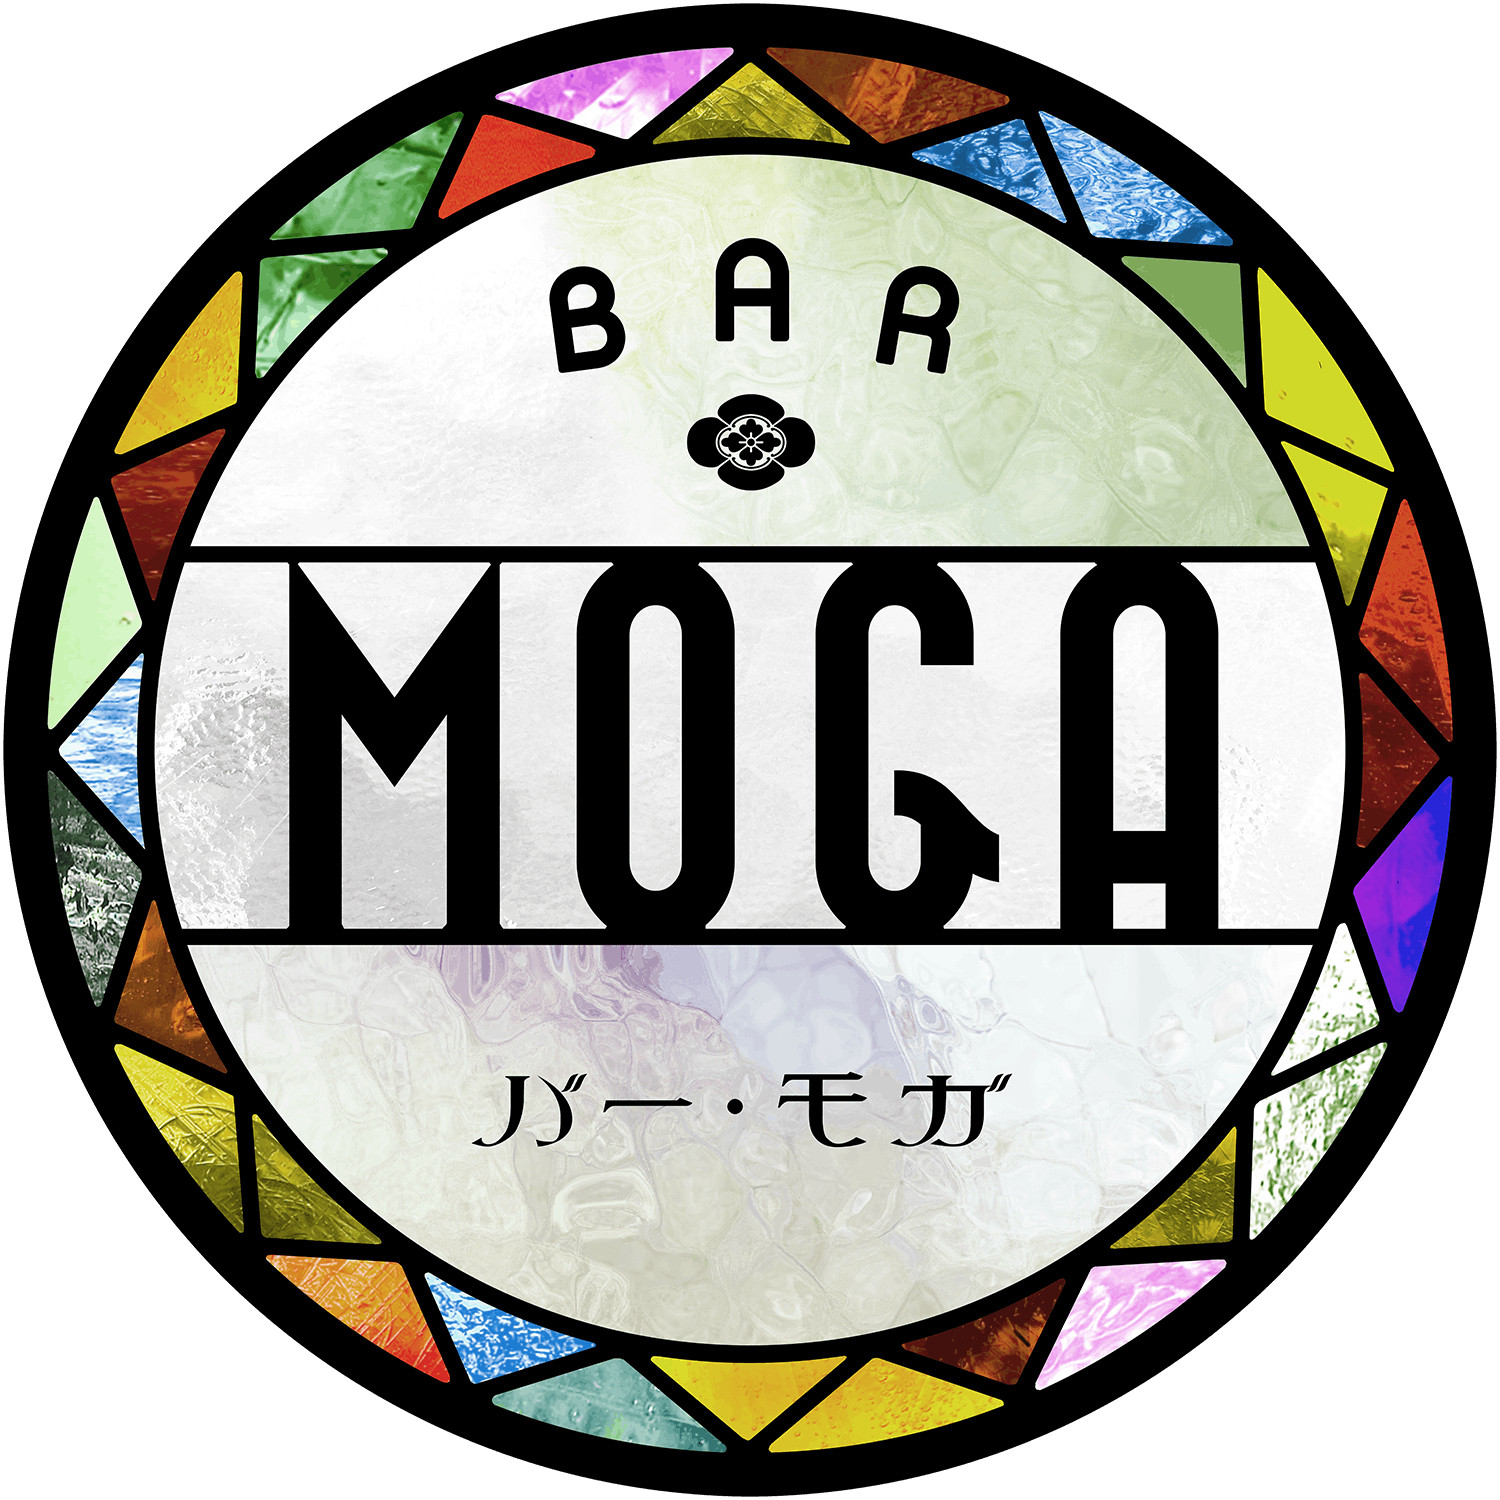 Bar Moga Home